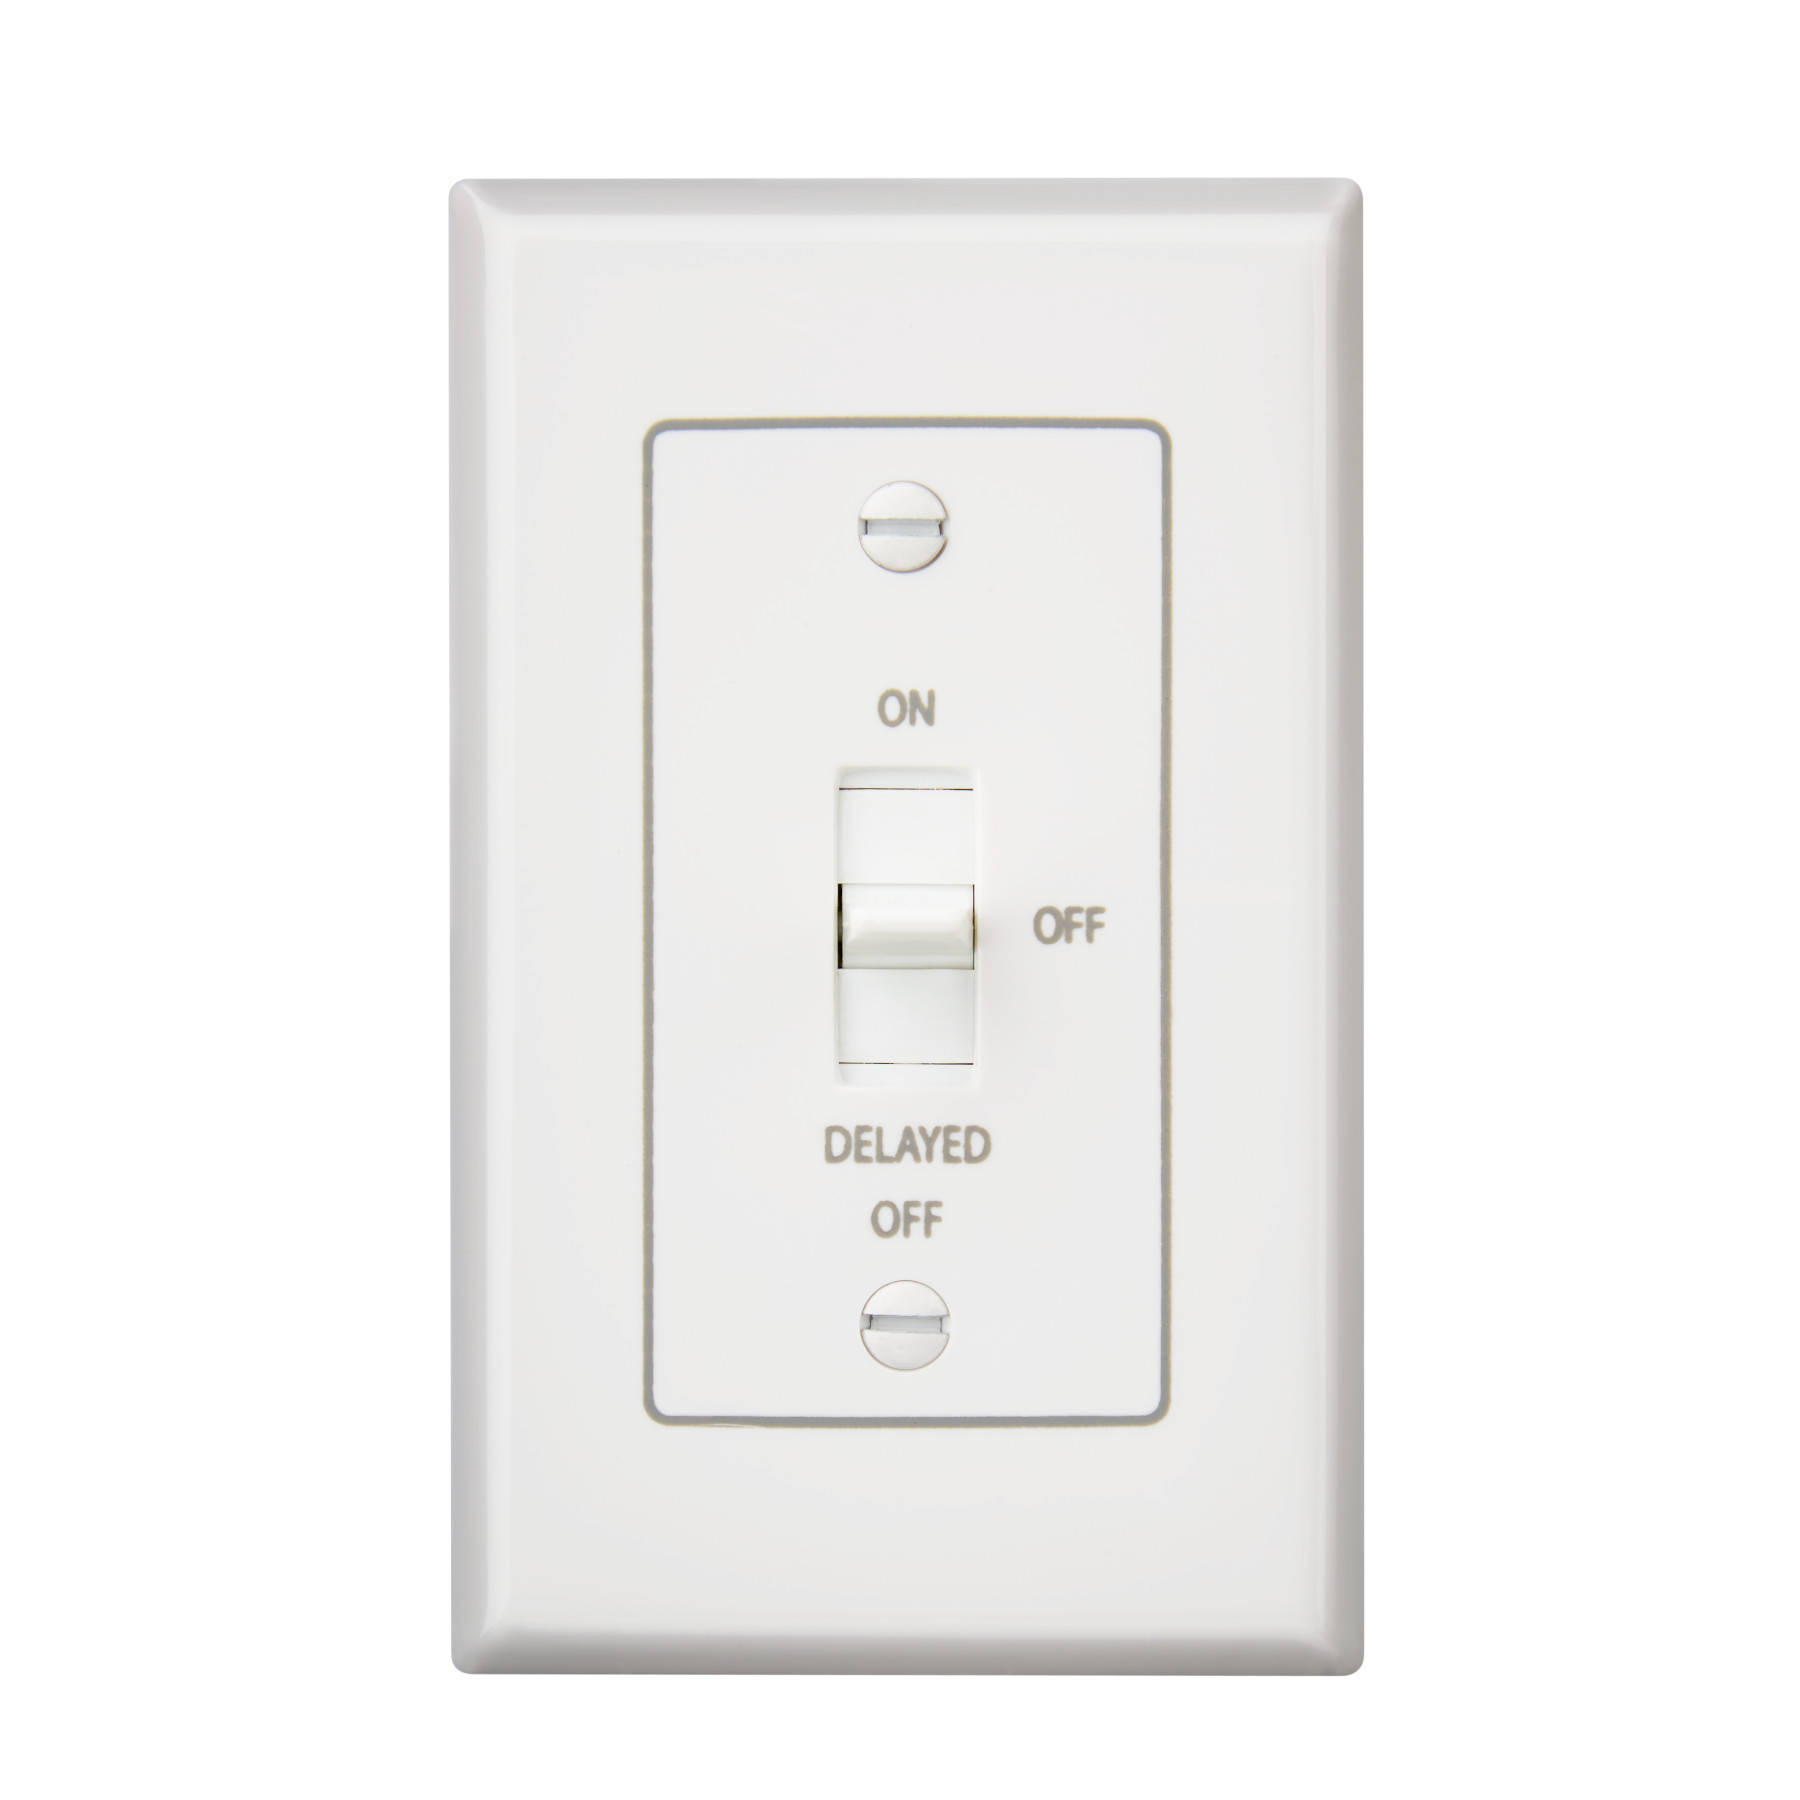 Broan-NuTone® Fan/Light Control w/ Off Delay. 4 amps, 120V, White